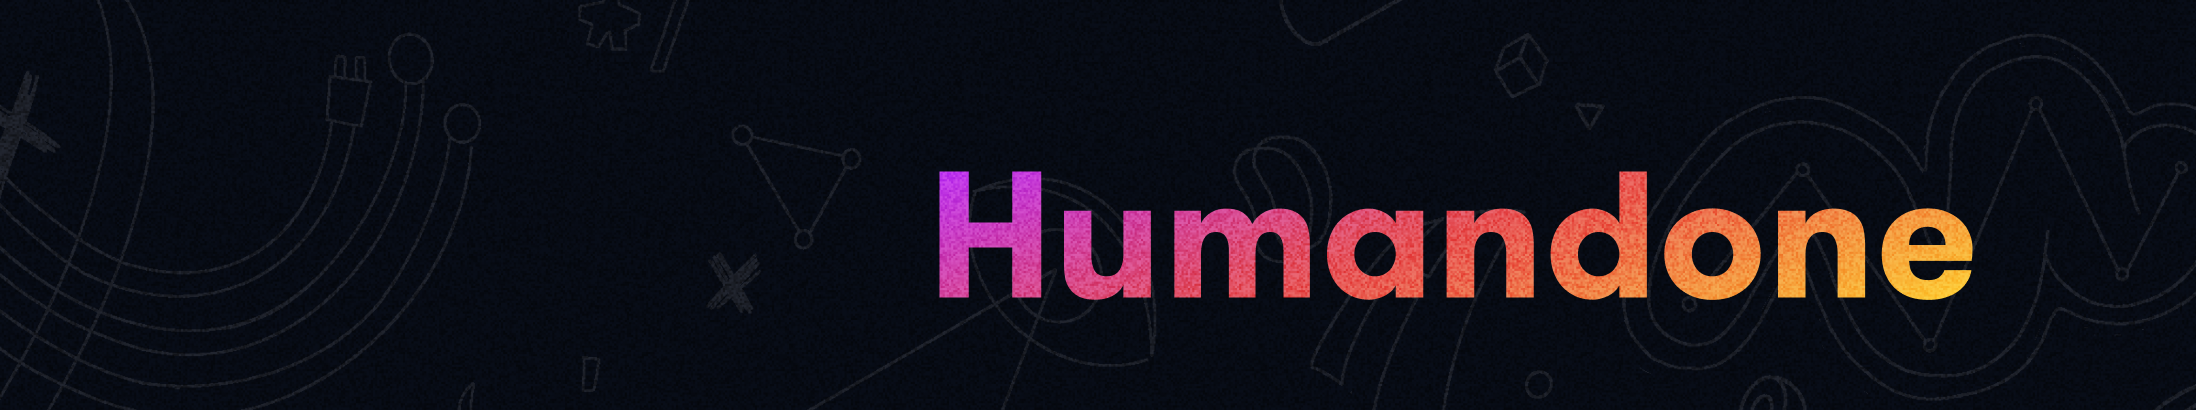 Profielbanner van Humandone Team